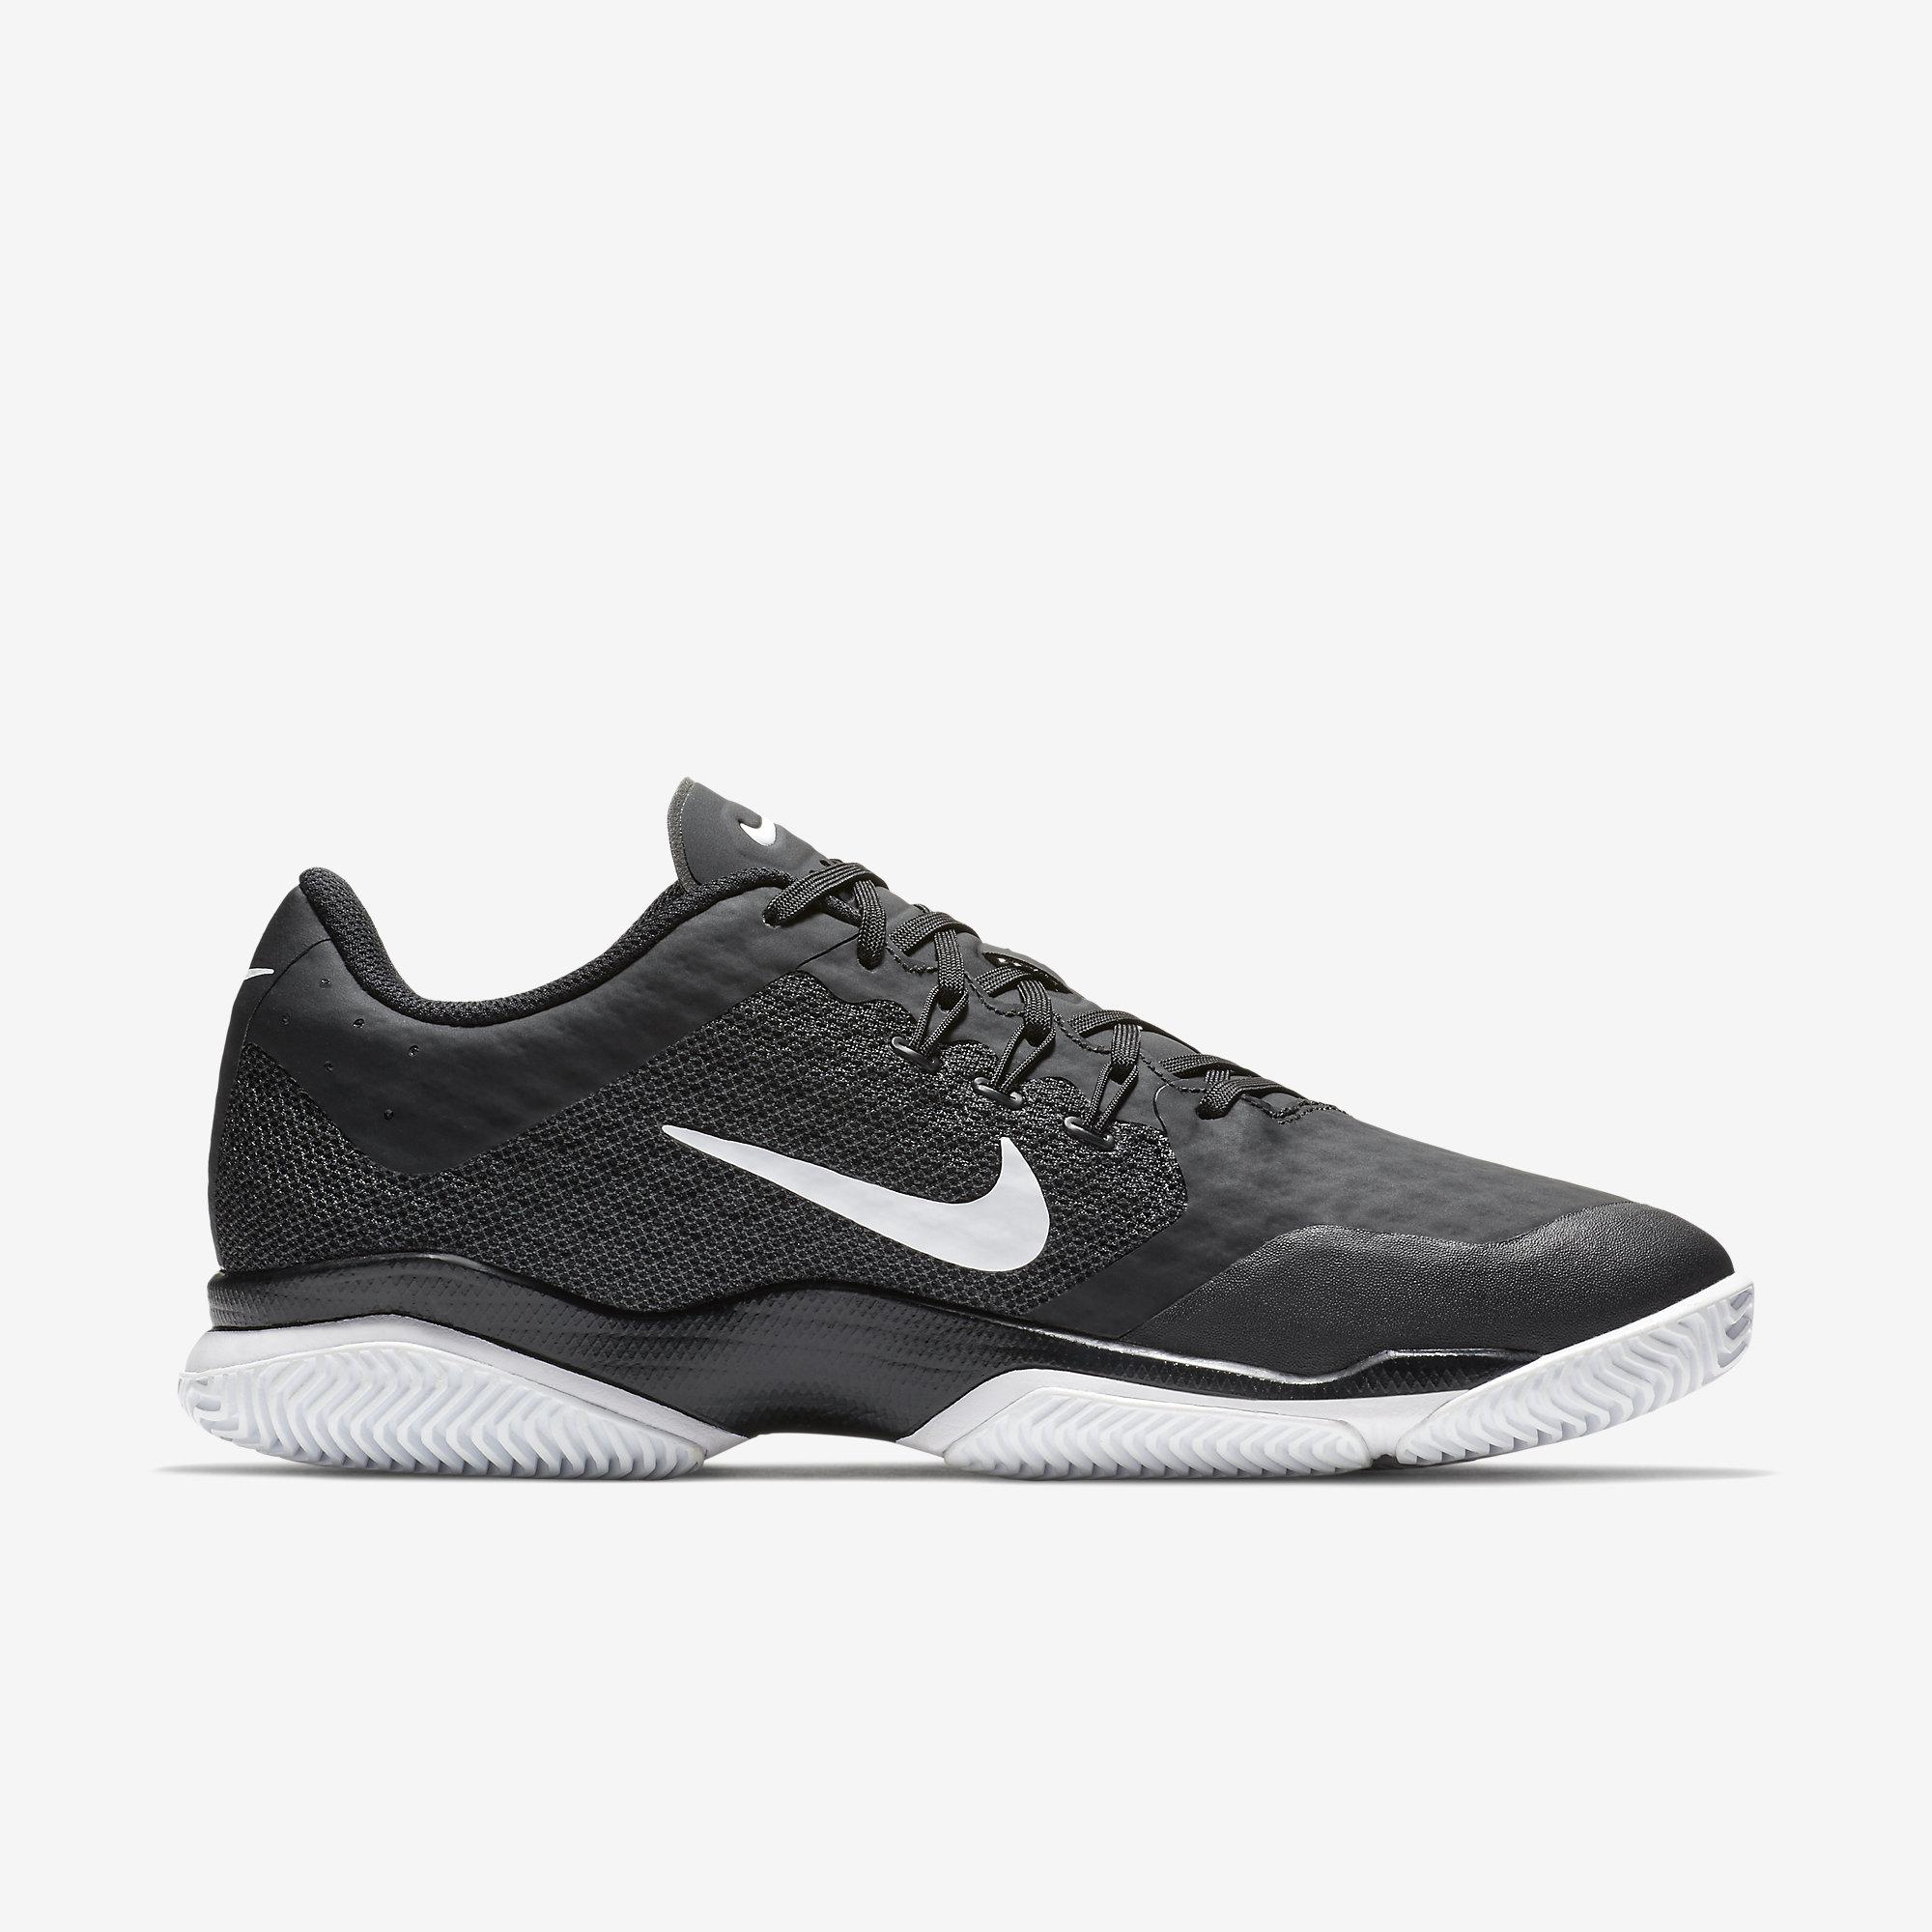 Nike Mens Air Zoom Ultra Tennis Shoes - Black/Anthracite - Tennisnuts.com